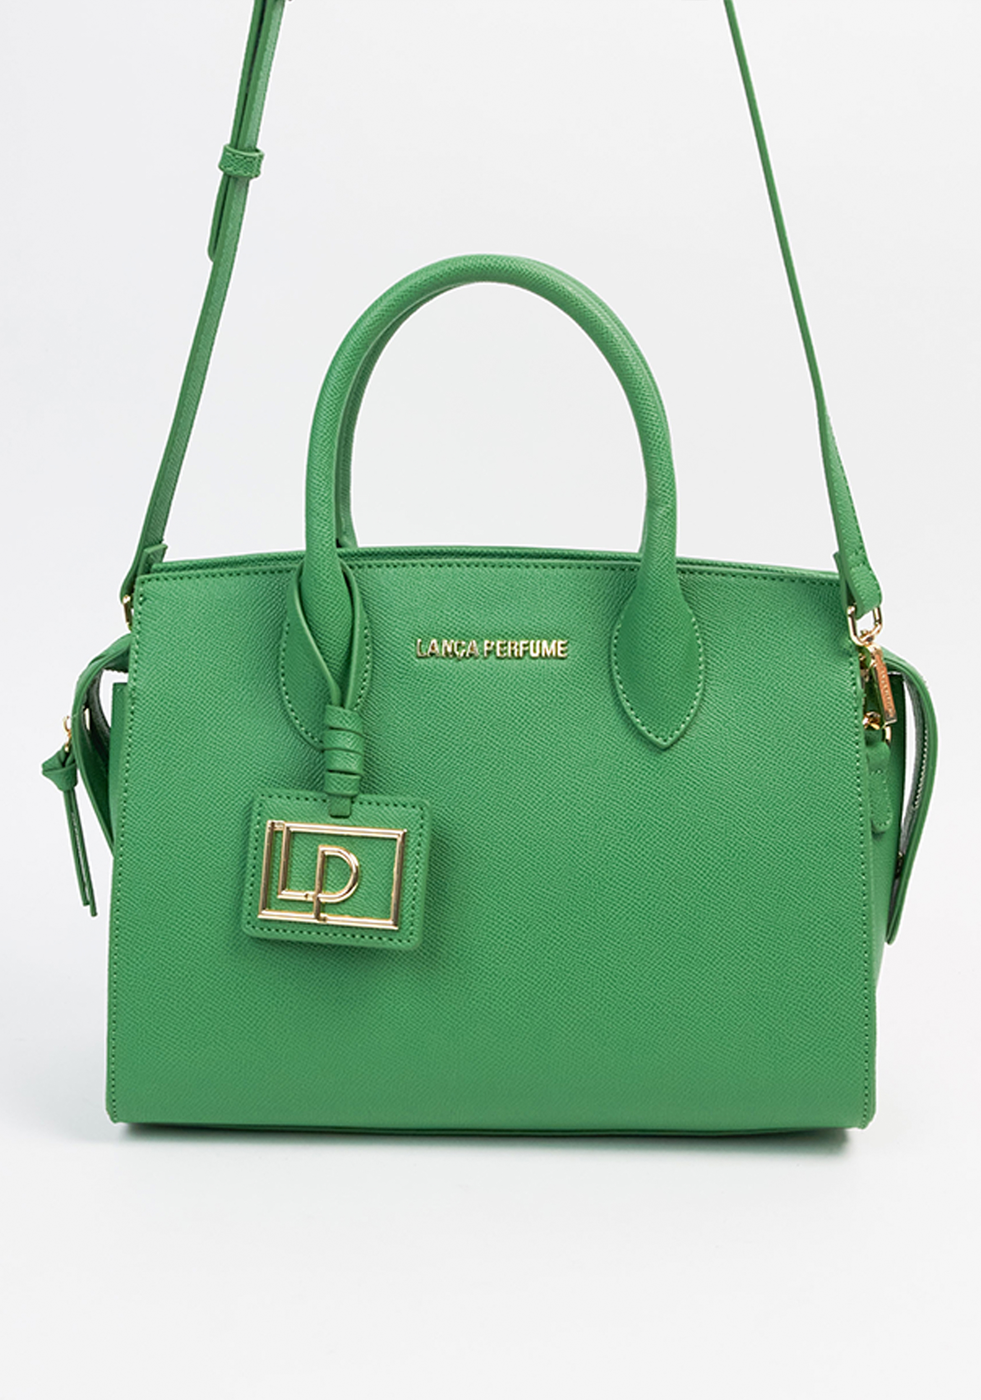 Bolsa Verde Lança Perfume Tote Bag Charm | ZZ MALL